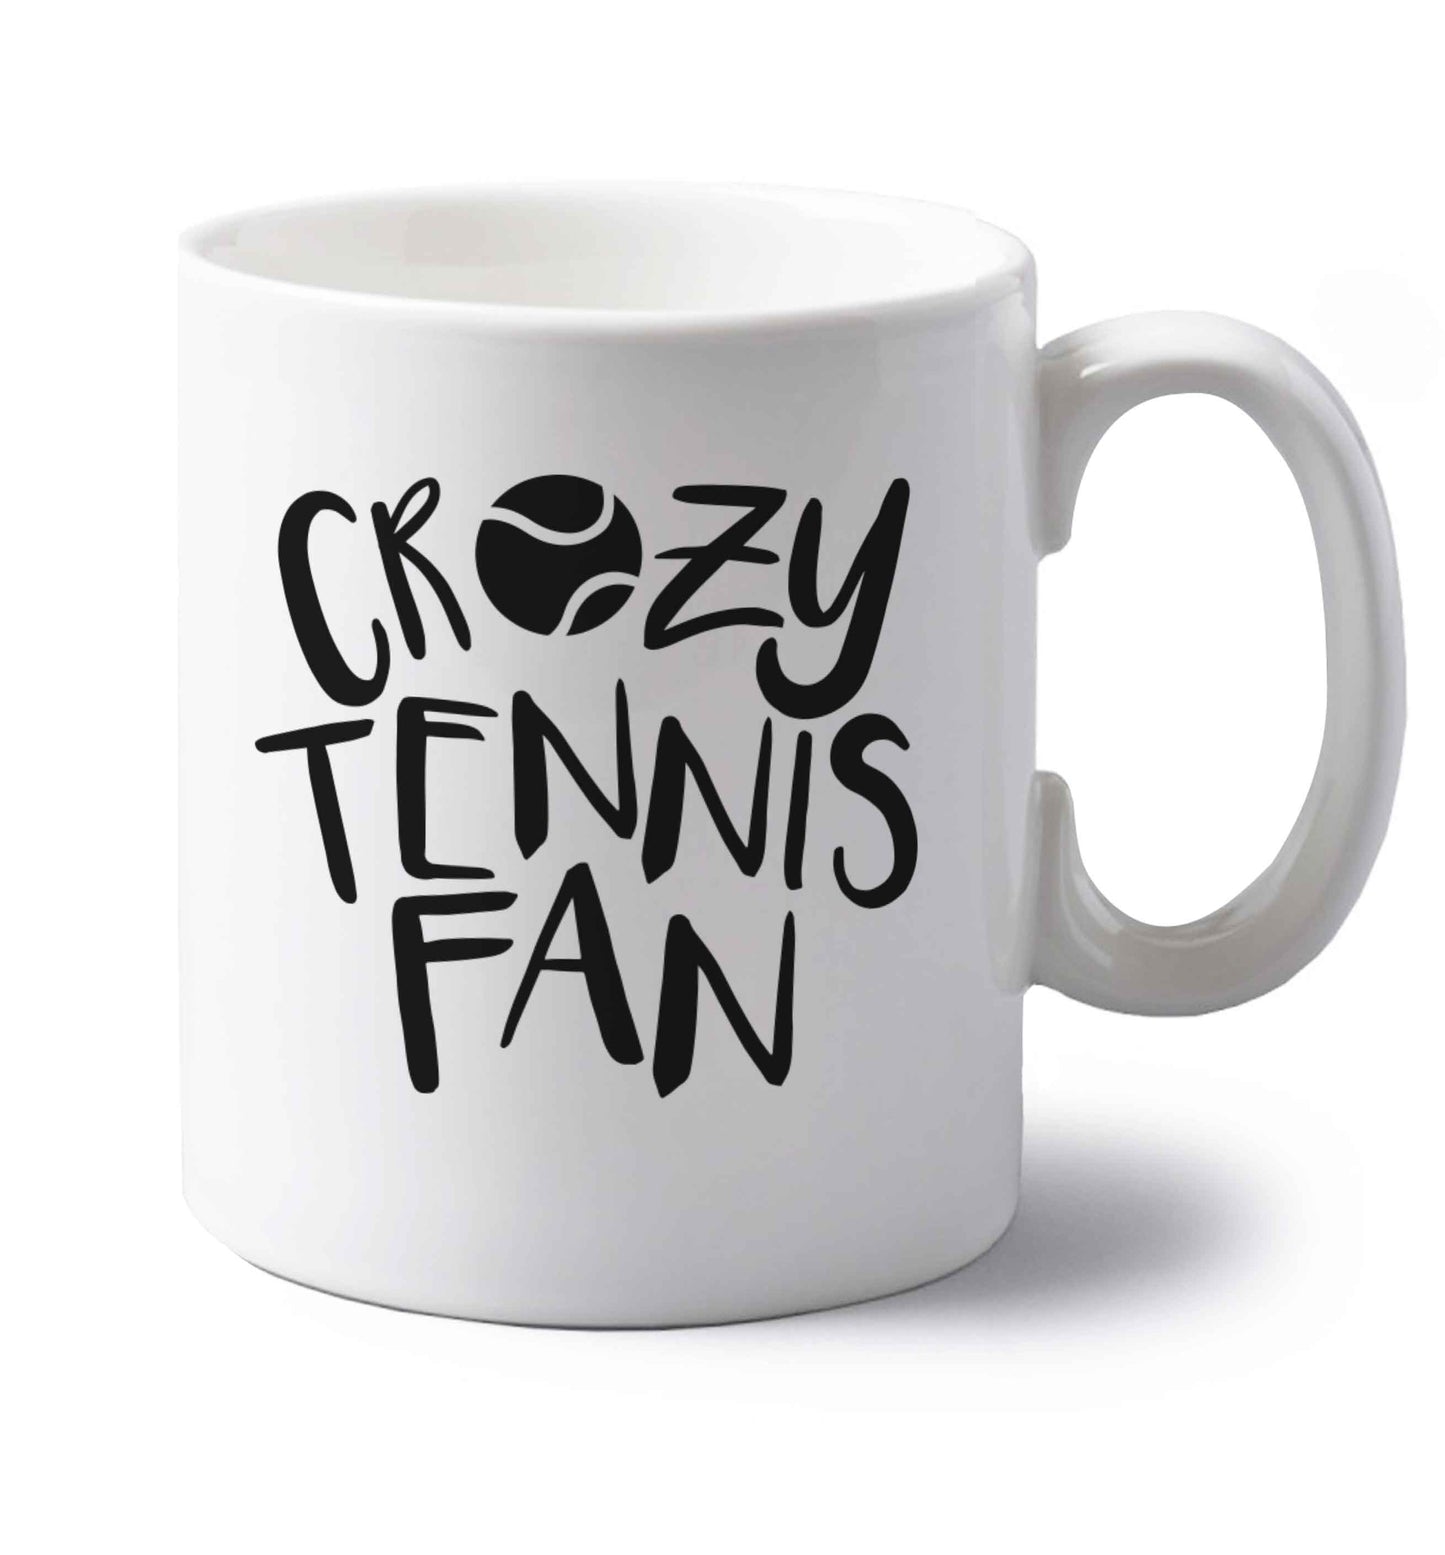 Crazy tennis fan left handed white ceramic mug 